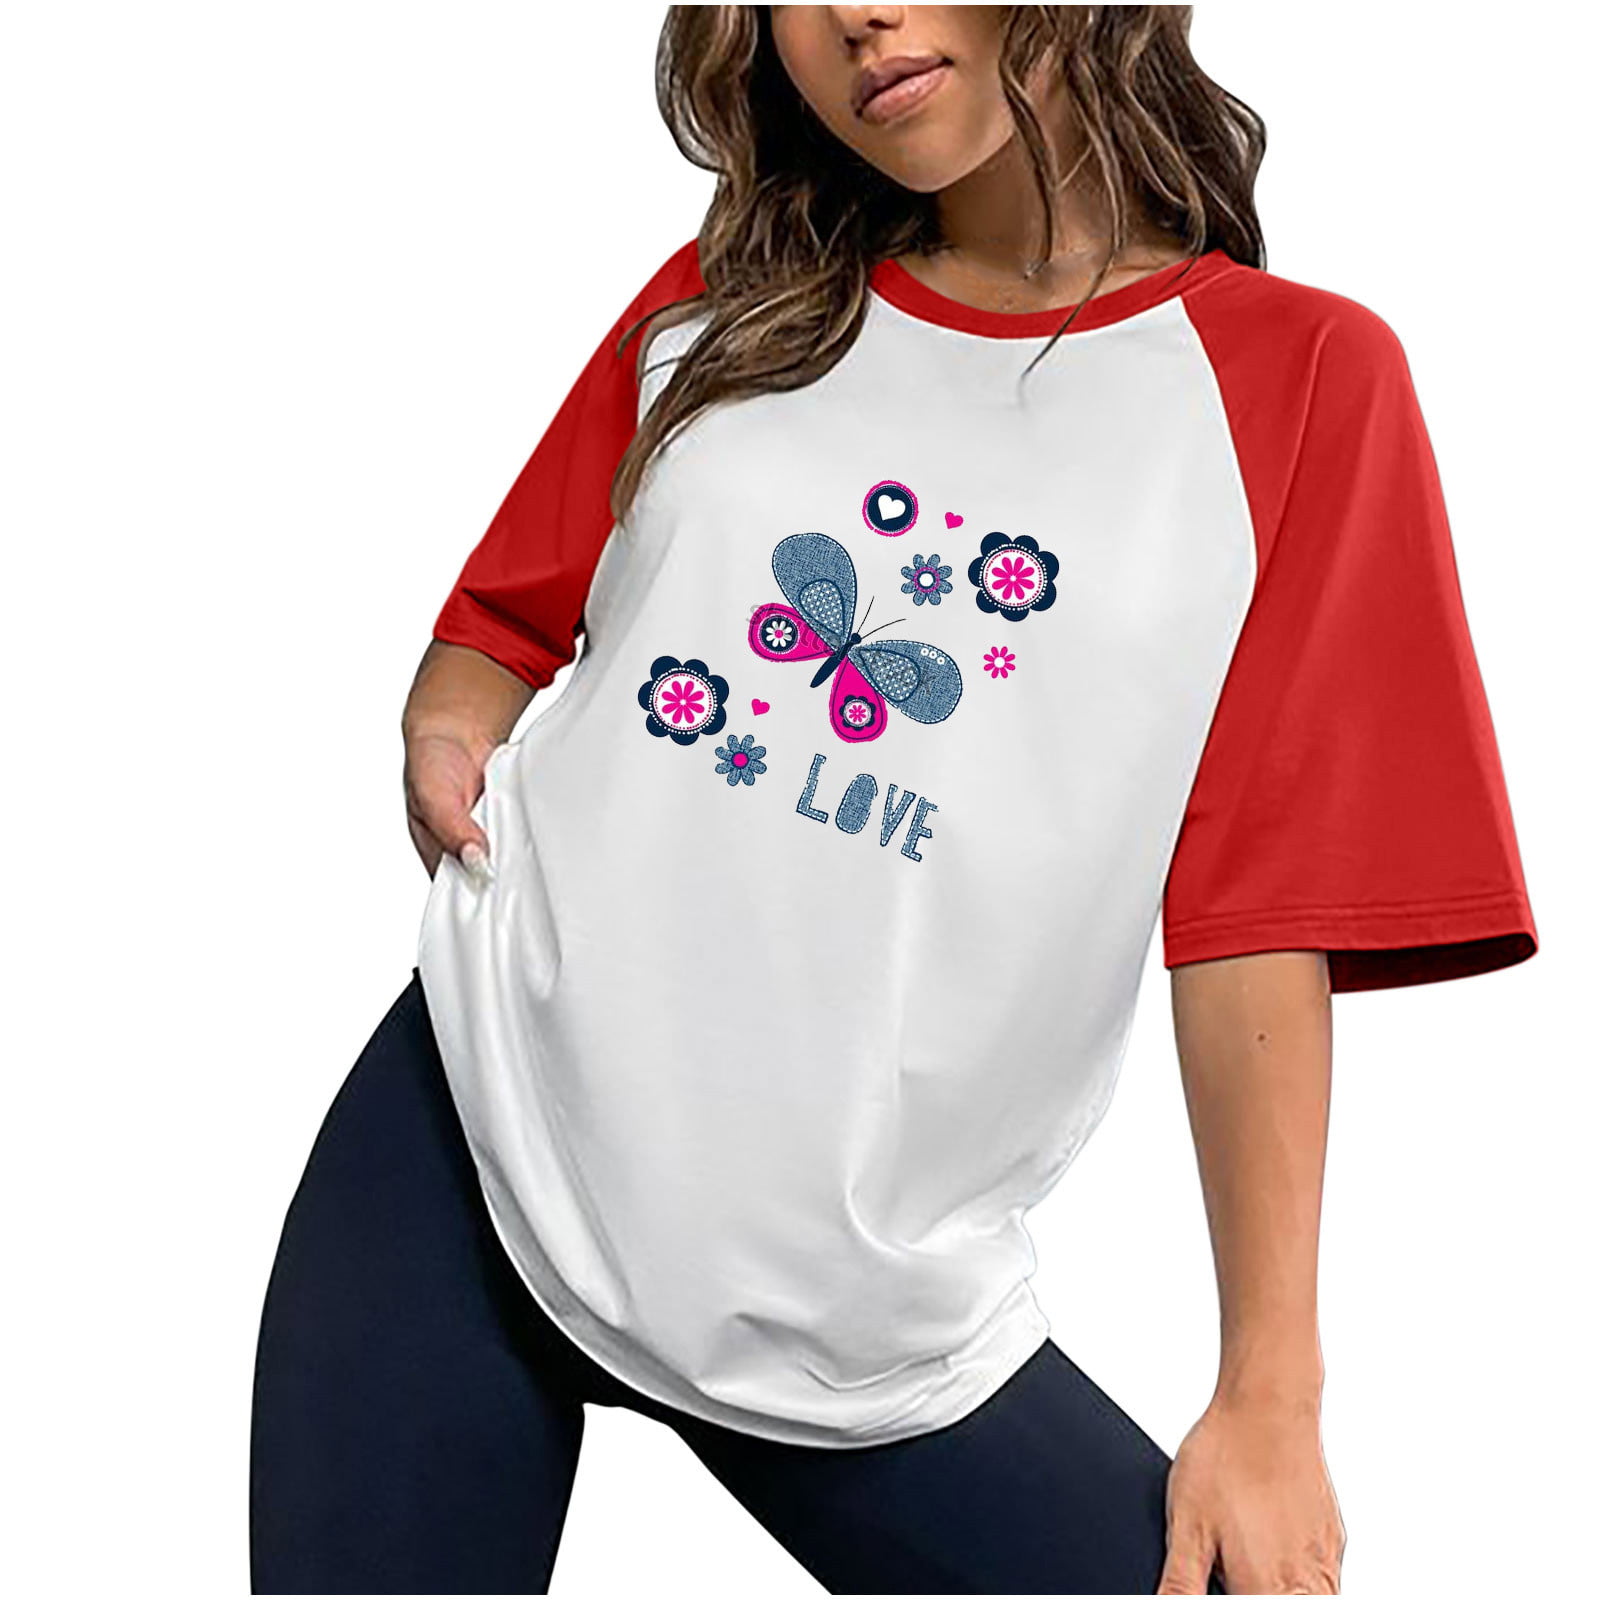 Dksld Women's Letter Print T Shirt Raglan Butterfly Graphic Top Short  Sleeve Round Neck Tees Shirt